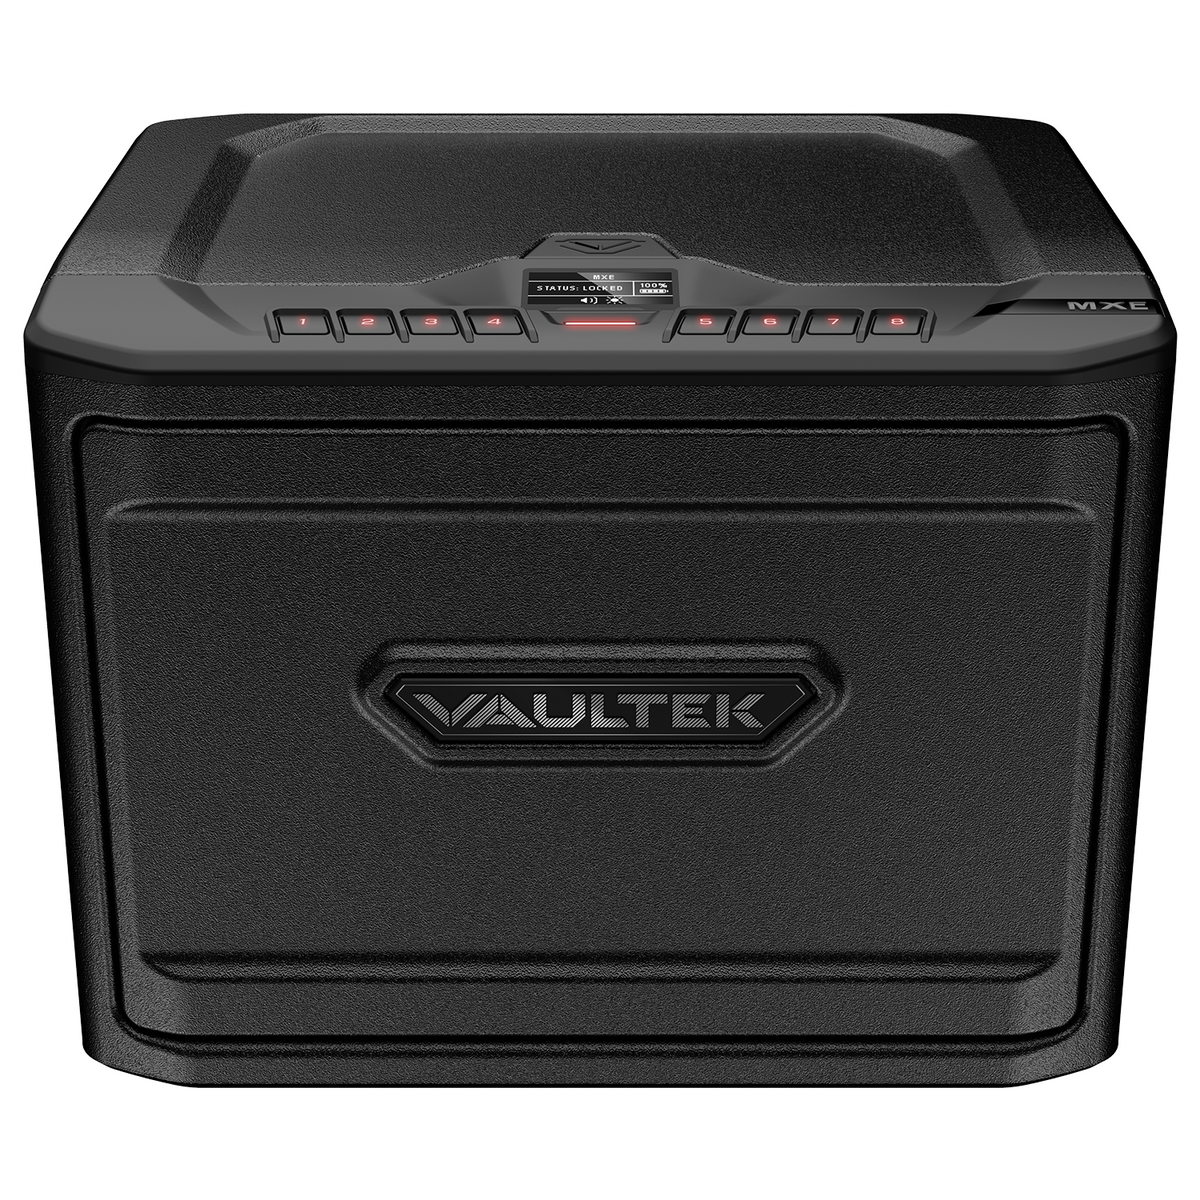 Vaultek- MXE High Capacity Rugged Modular Keypad Safe